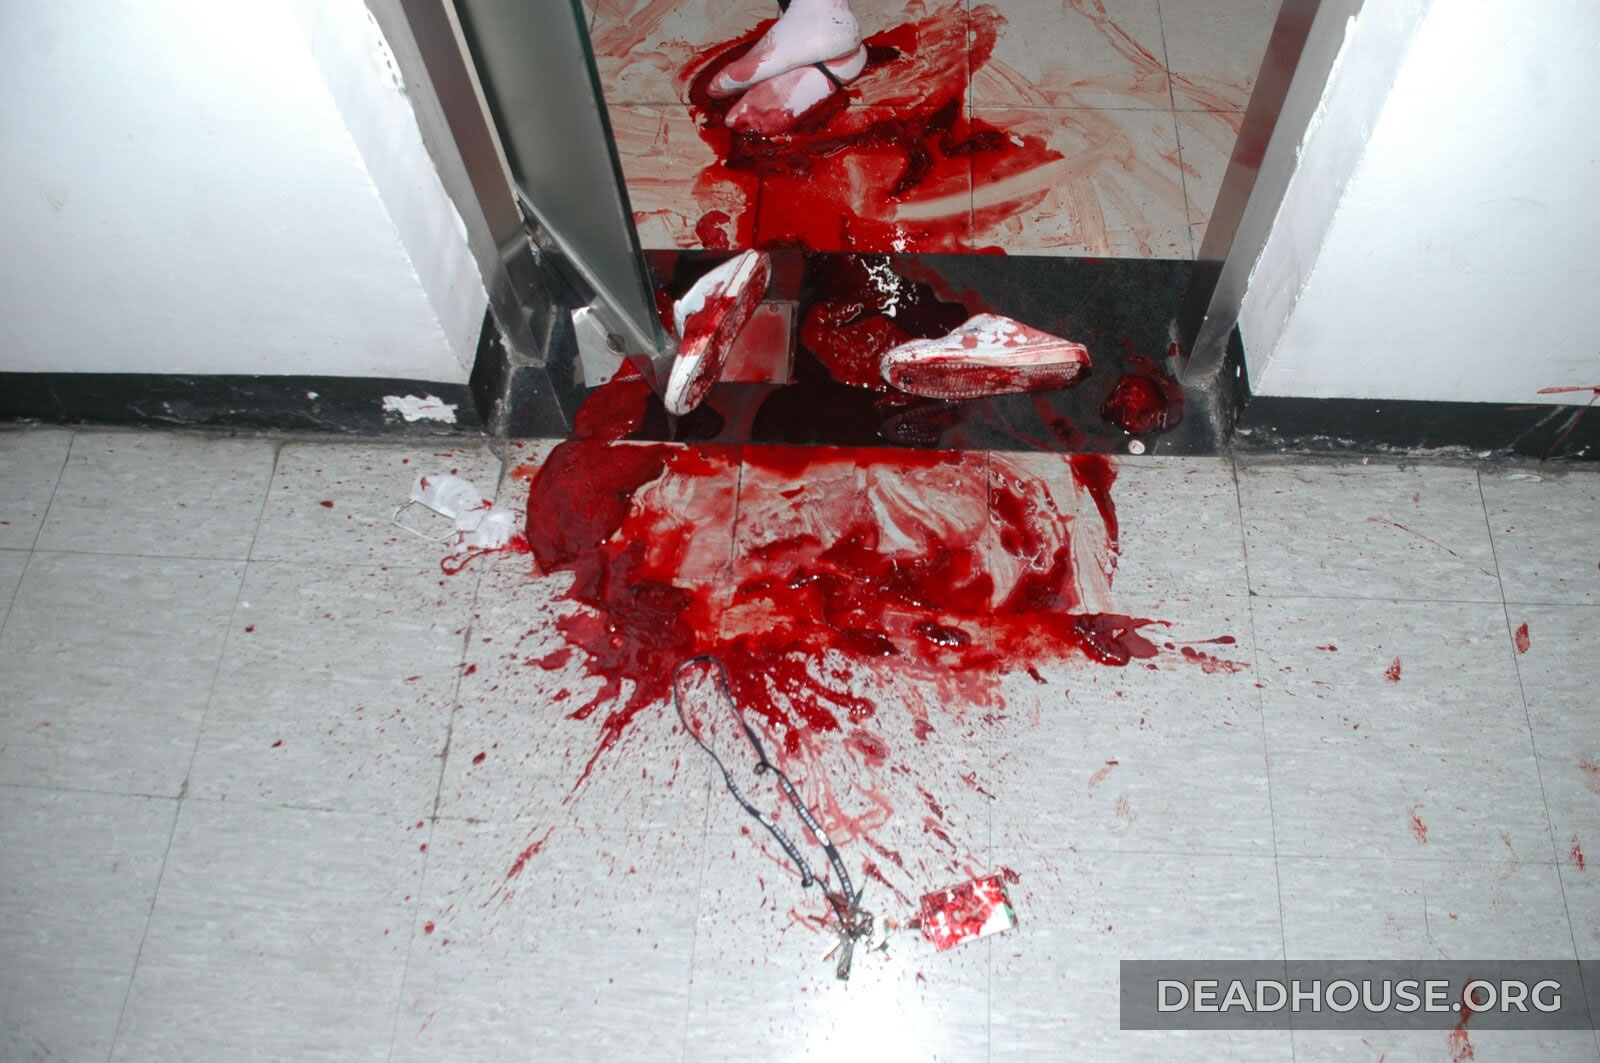 Bloody shoes in the doorway